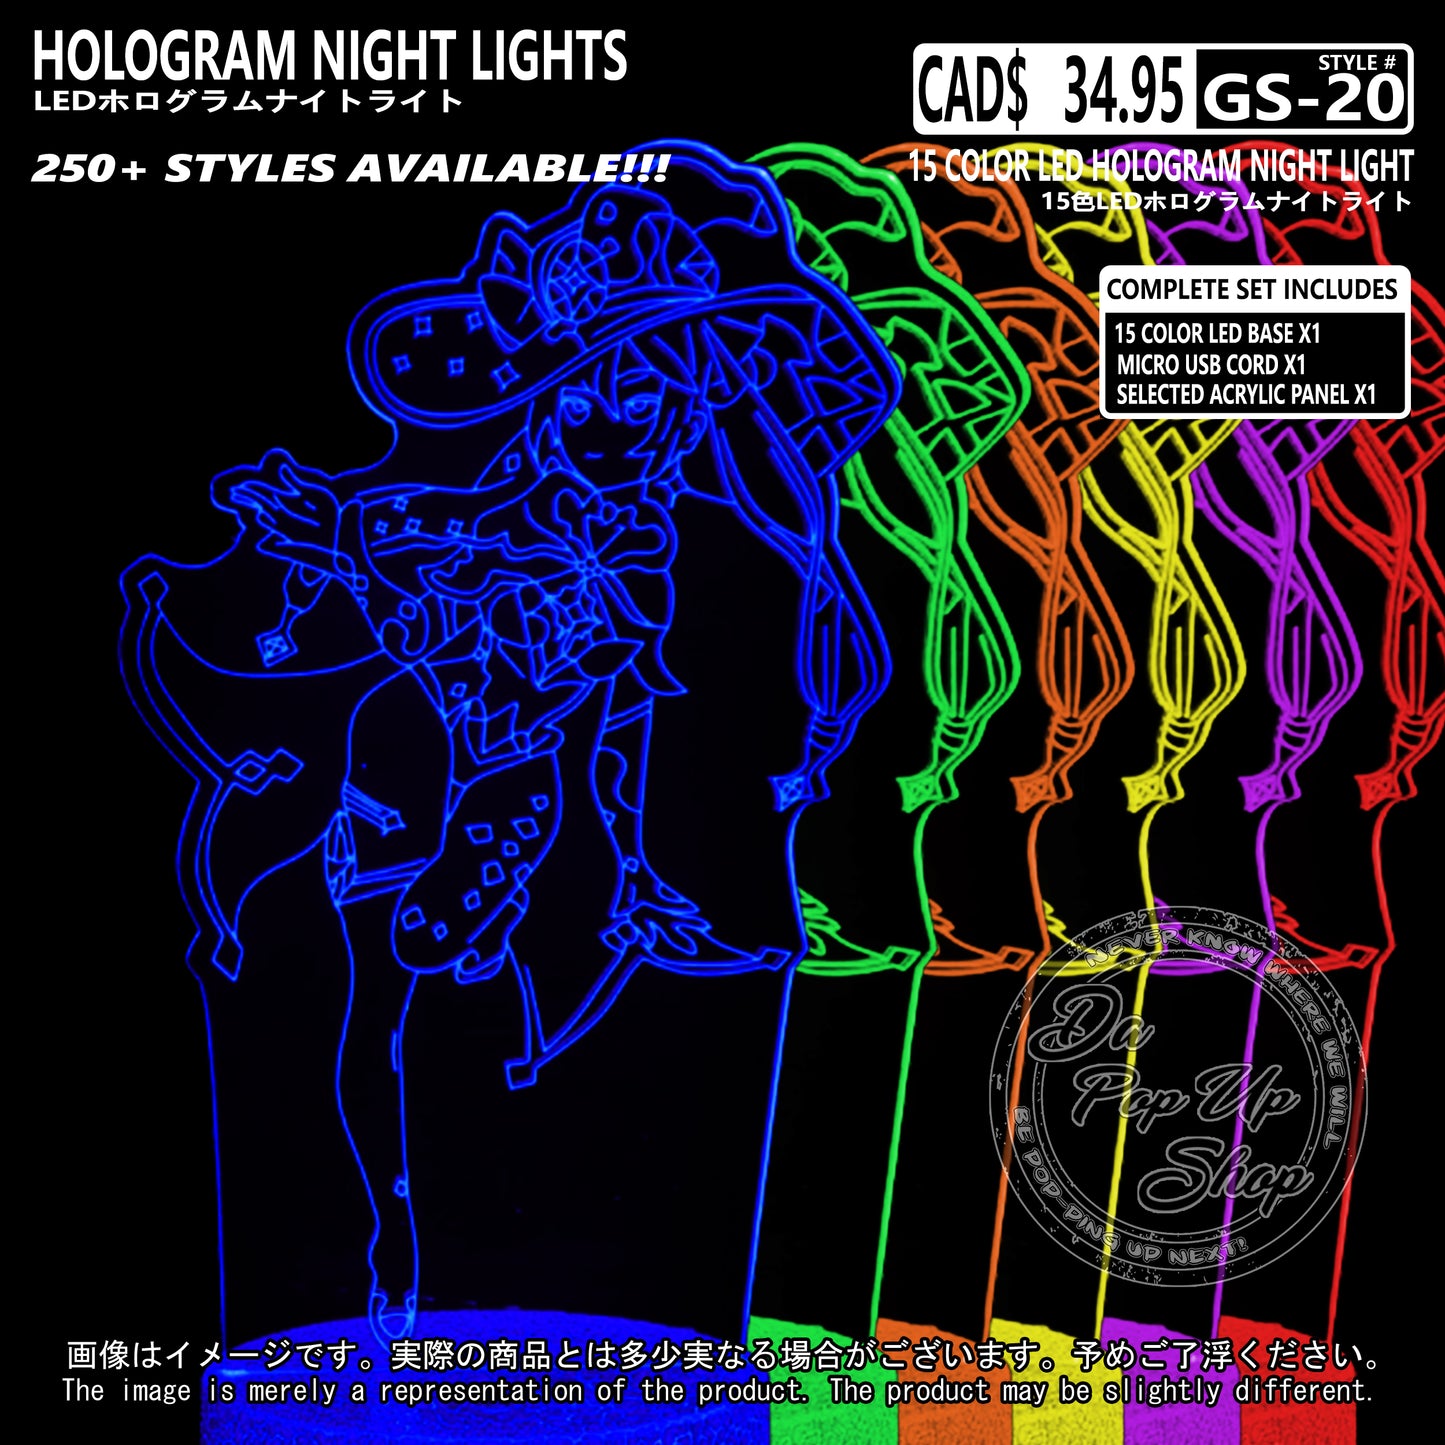 (GS-20) MONA Genshin Impact Hologram LED Night Light